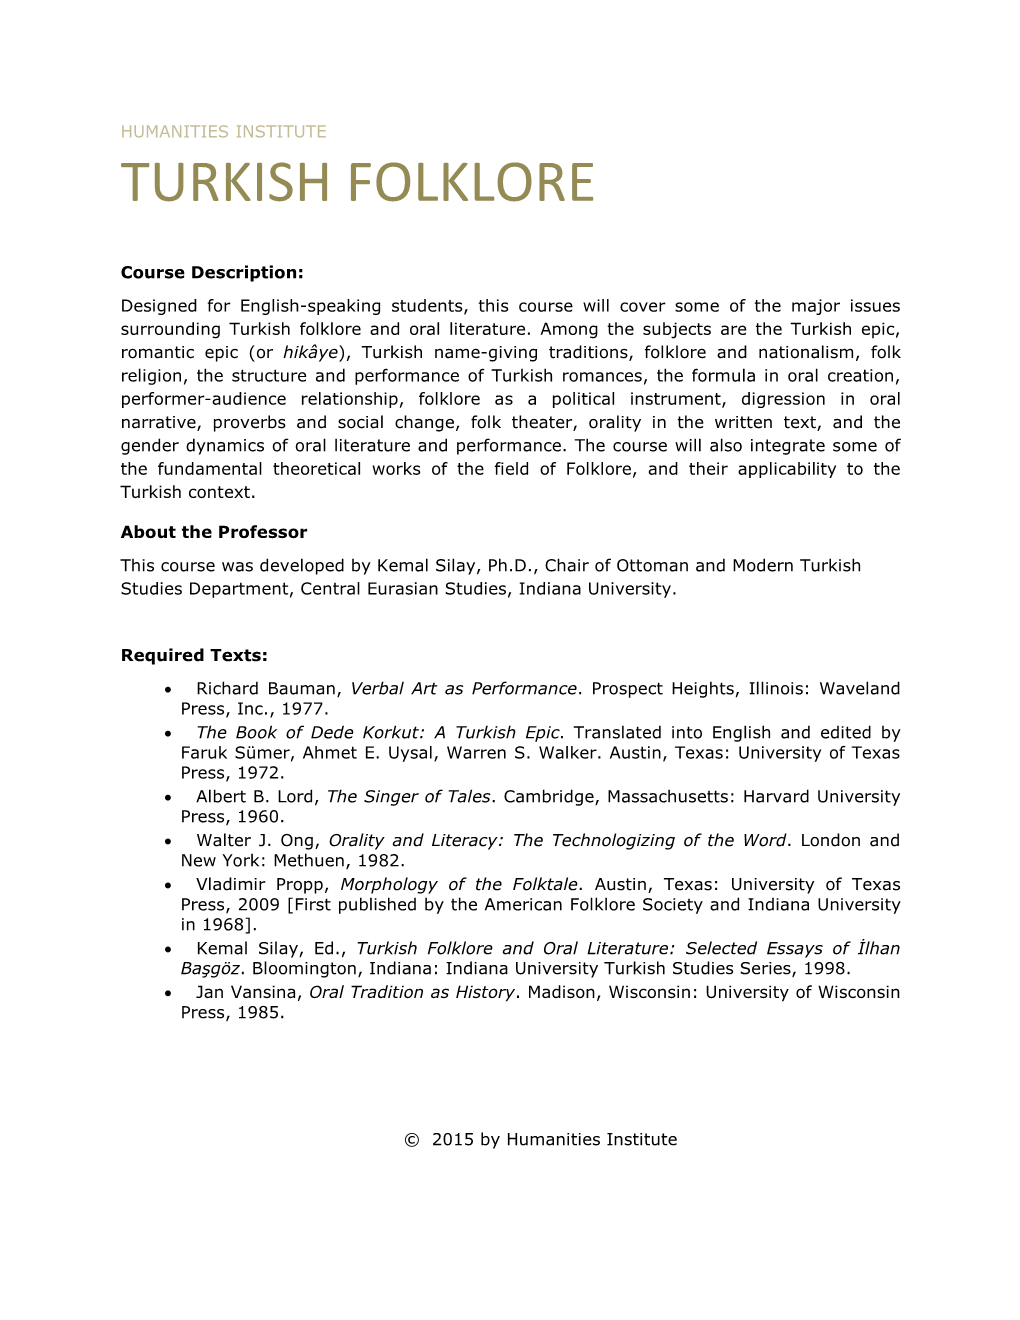 Turkish Folklore